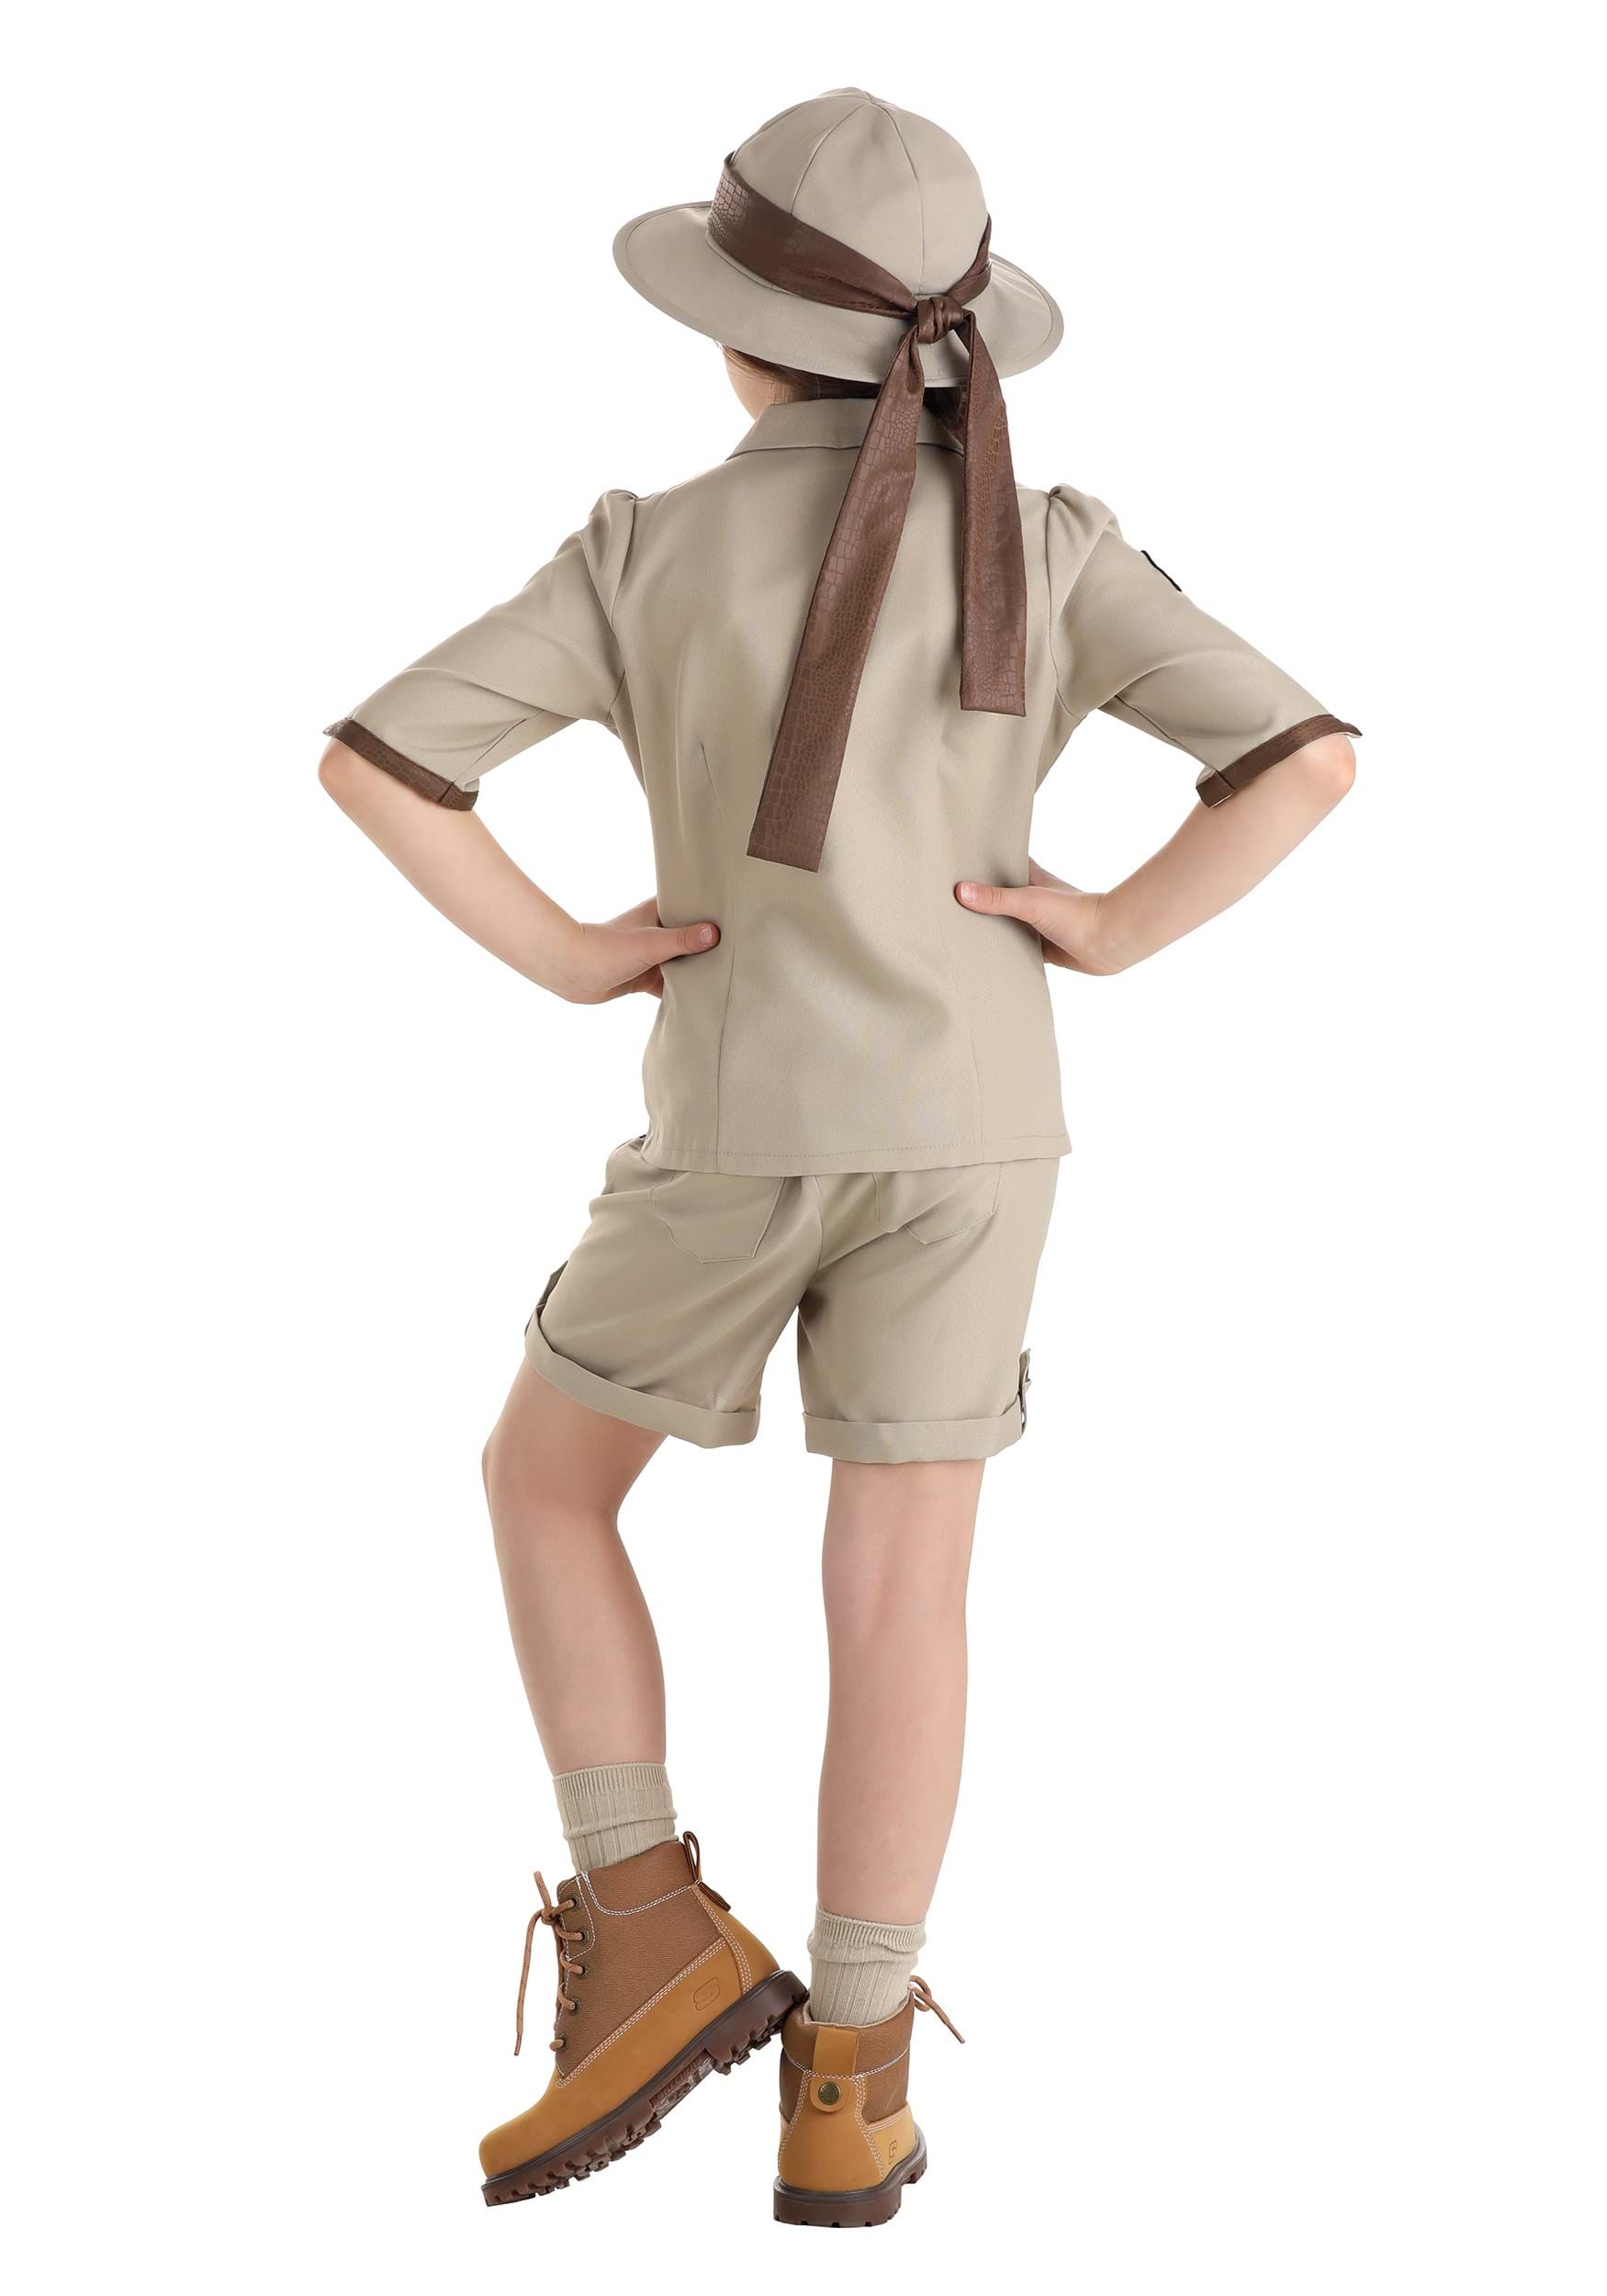 Kid's Paleontologist Costume